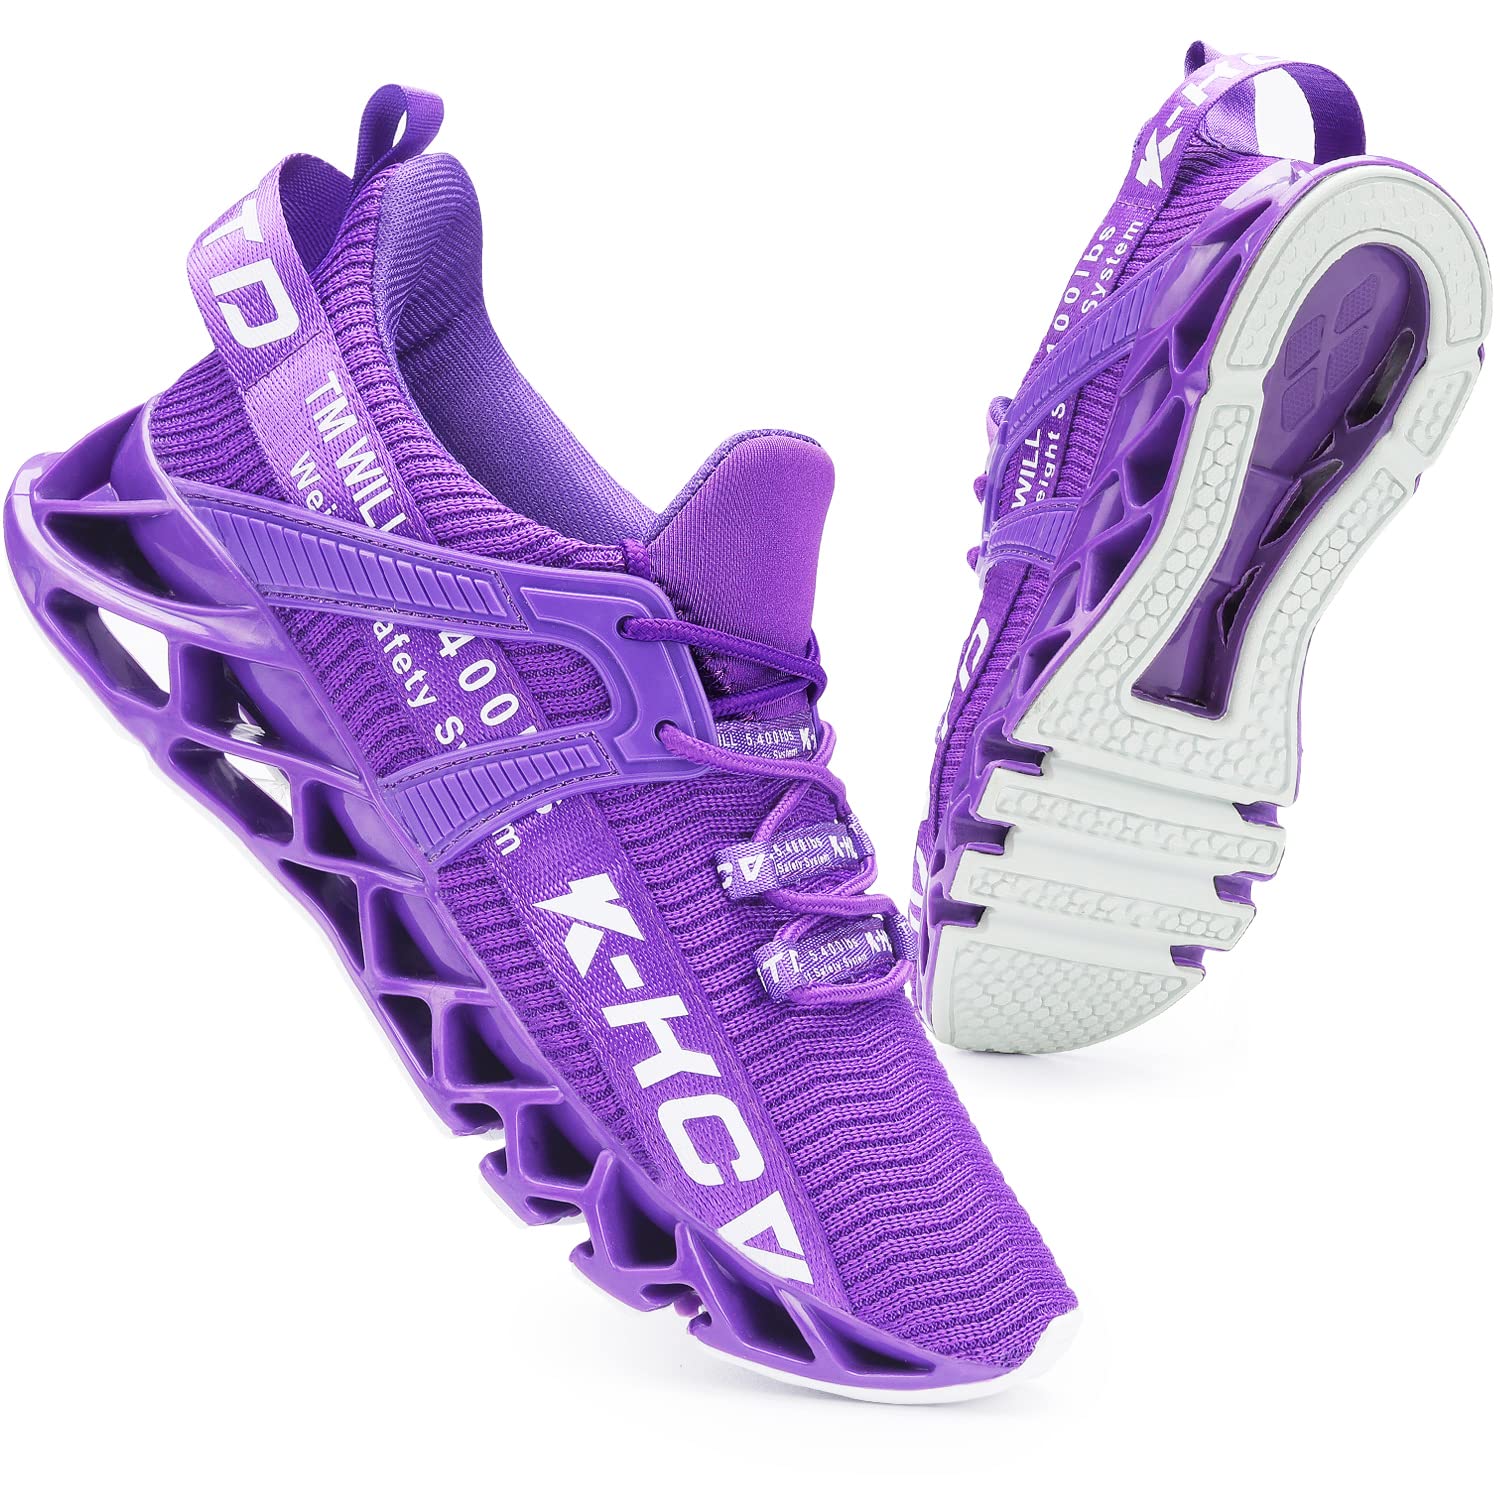 Kcvtd Steel Toe Shoes For Women Safety Work Shoes Comfortable Steel Toe Sneakers Puncture Proof Slip On Sneakers Women Purple